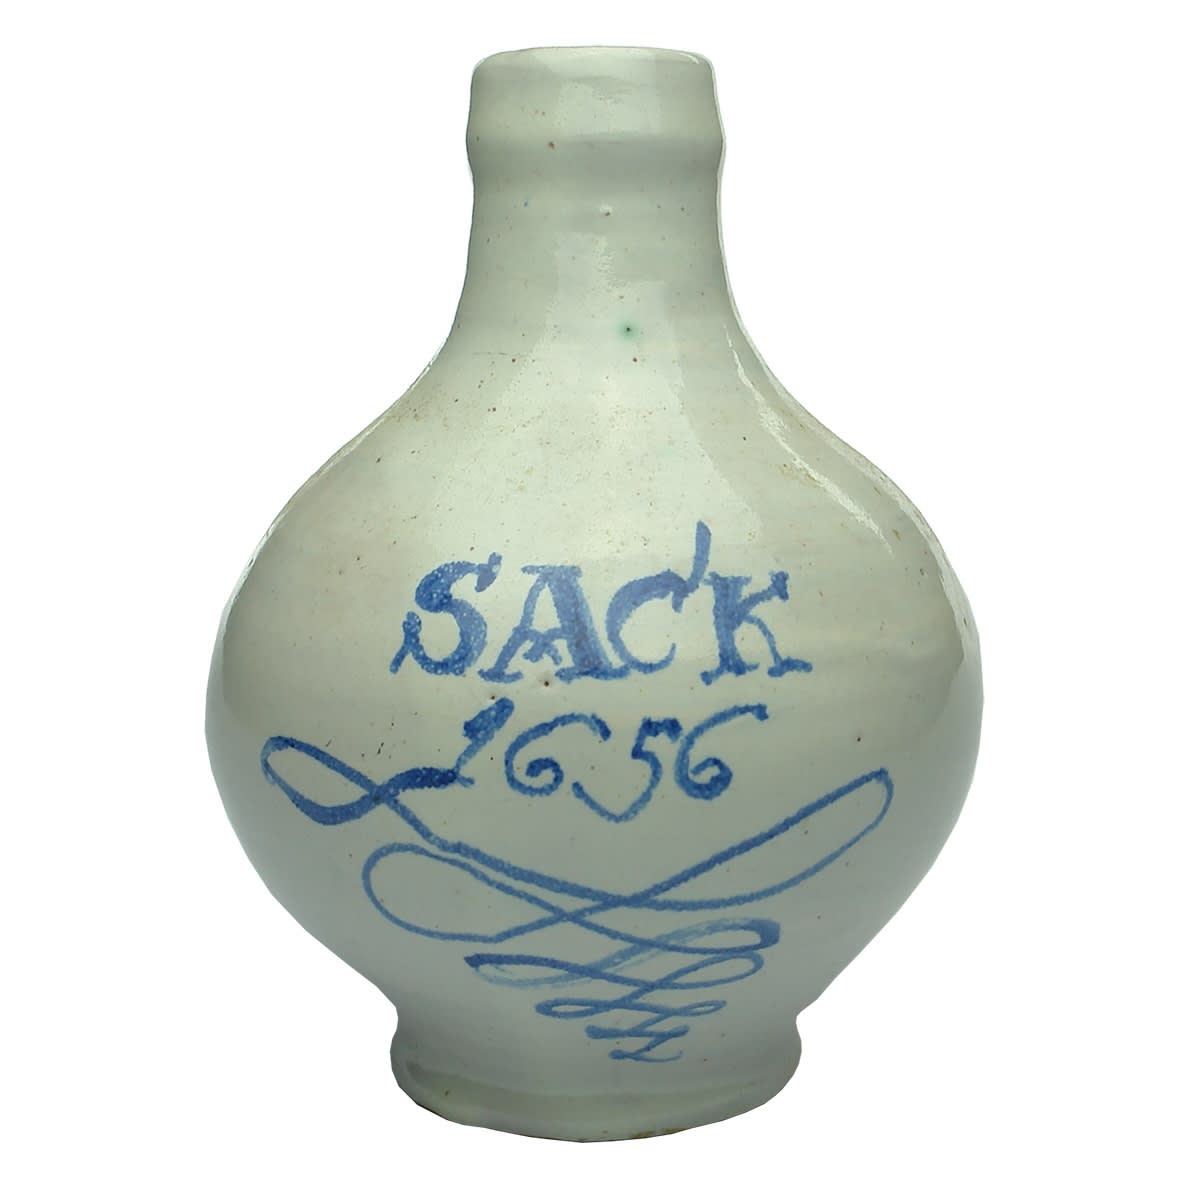 Wine. Sack, 1656. Jug with blue print. 1900s.